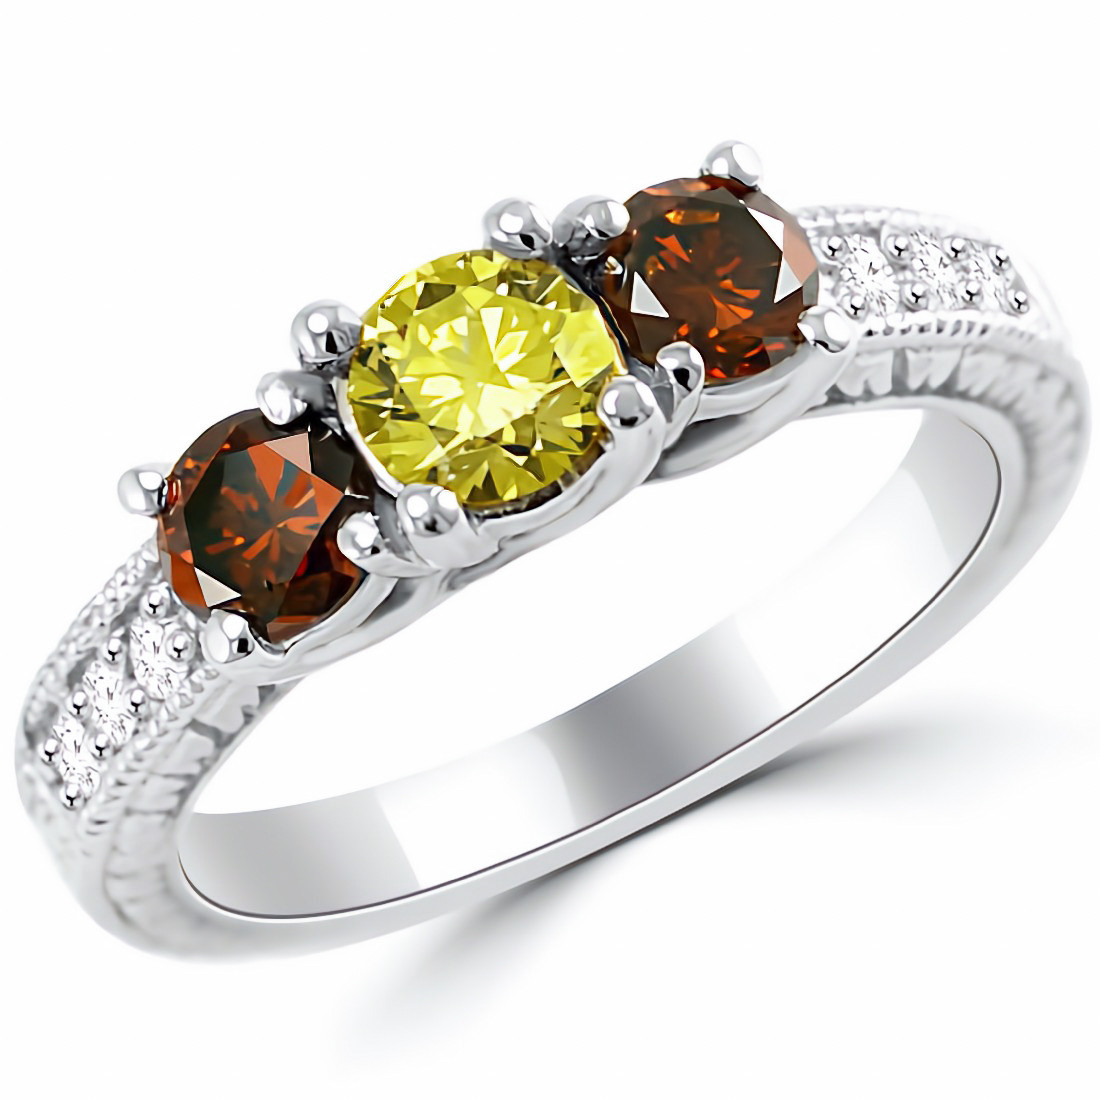 1 Gram Gold Forming Red Stone With Diamond Best Quality Ring For Men -  Style A254, पुरुषों की डायमंड रिंग - Soni Fashion, Rajkot | ID:  2851260667973